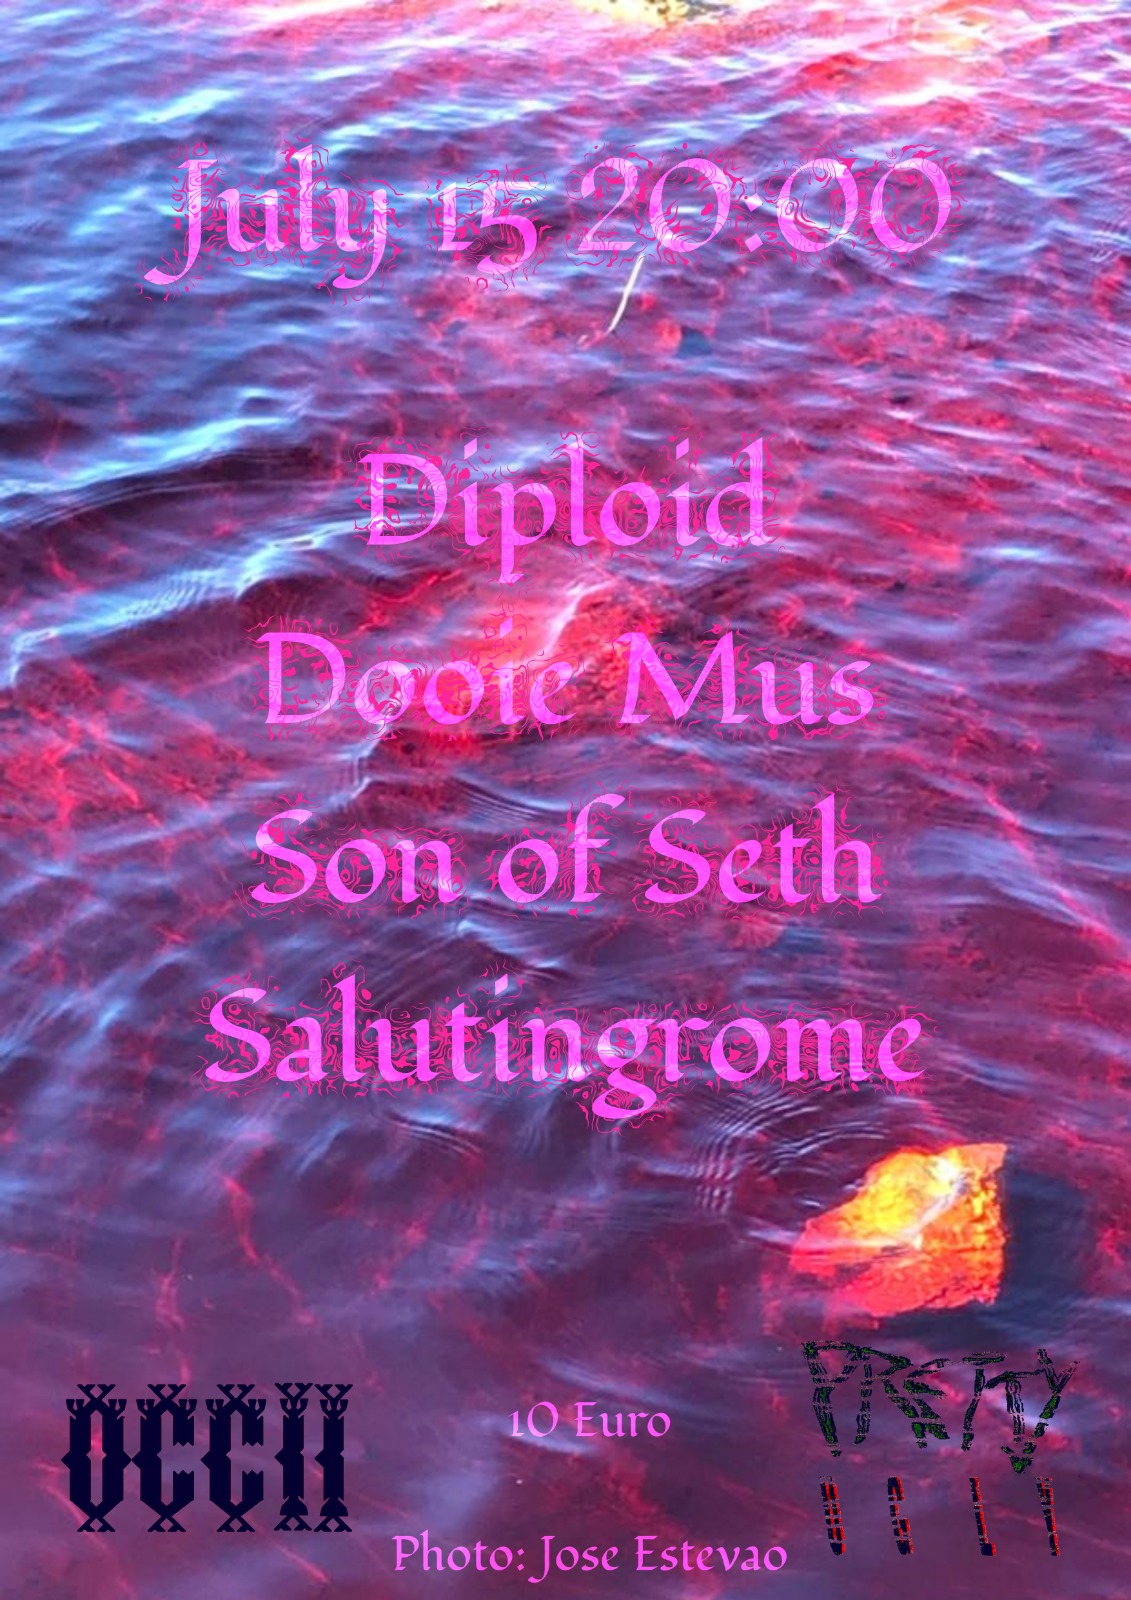 Diploid + Son of Seth + Dooie Mus + salutingrome